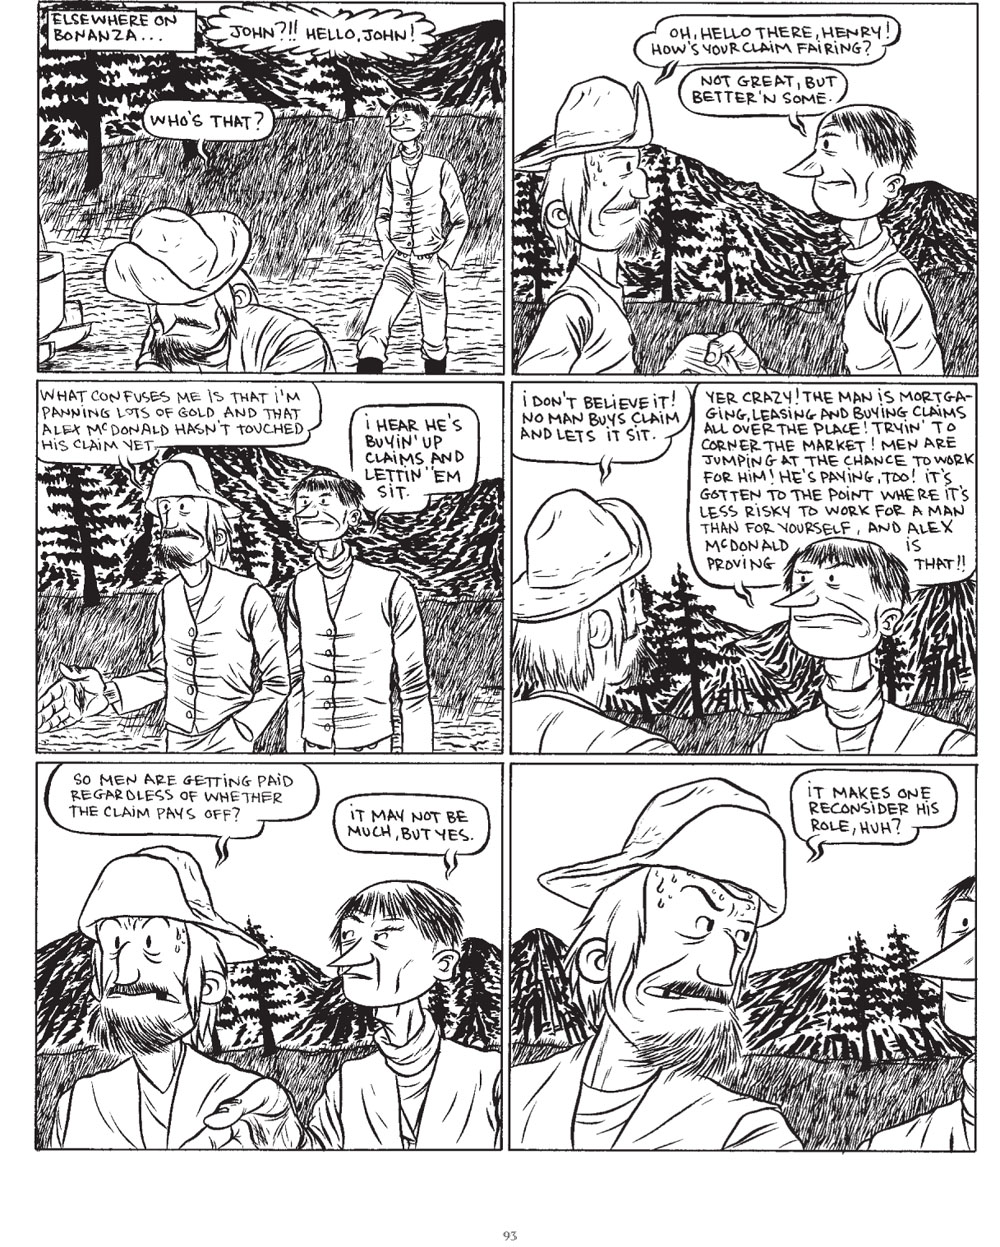 The Klondike Page 093